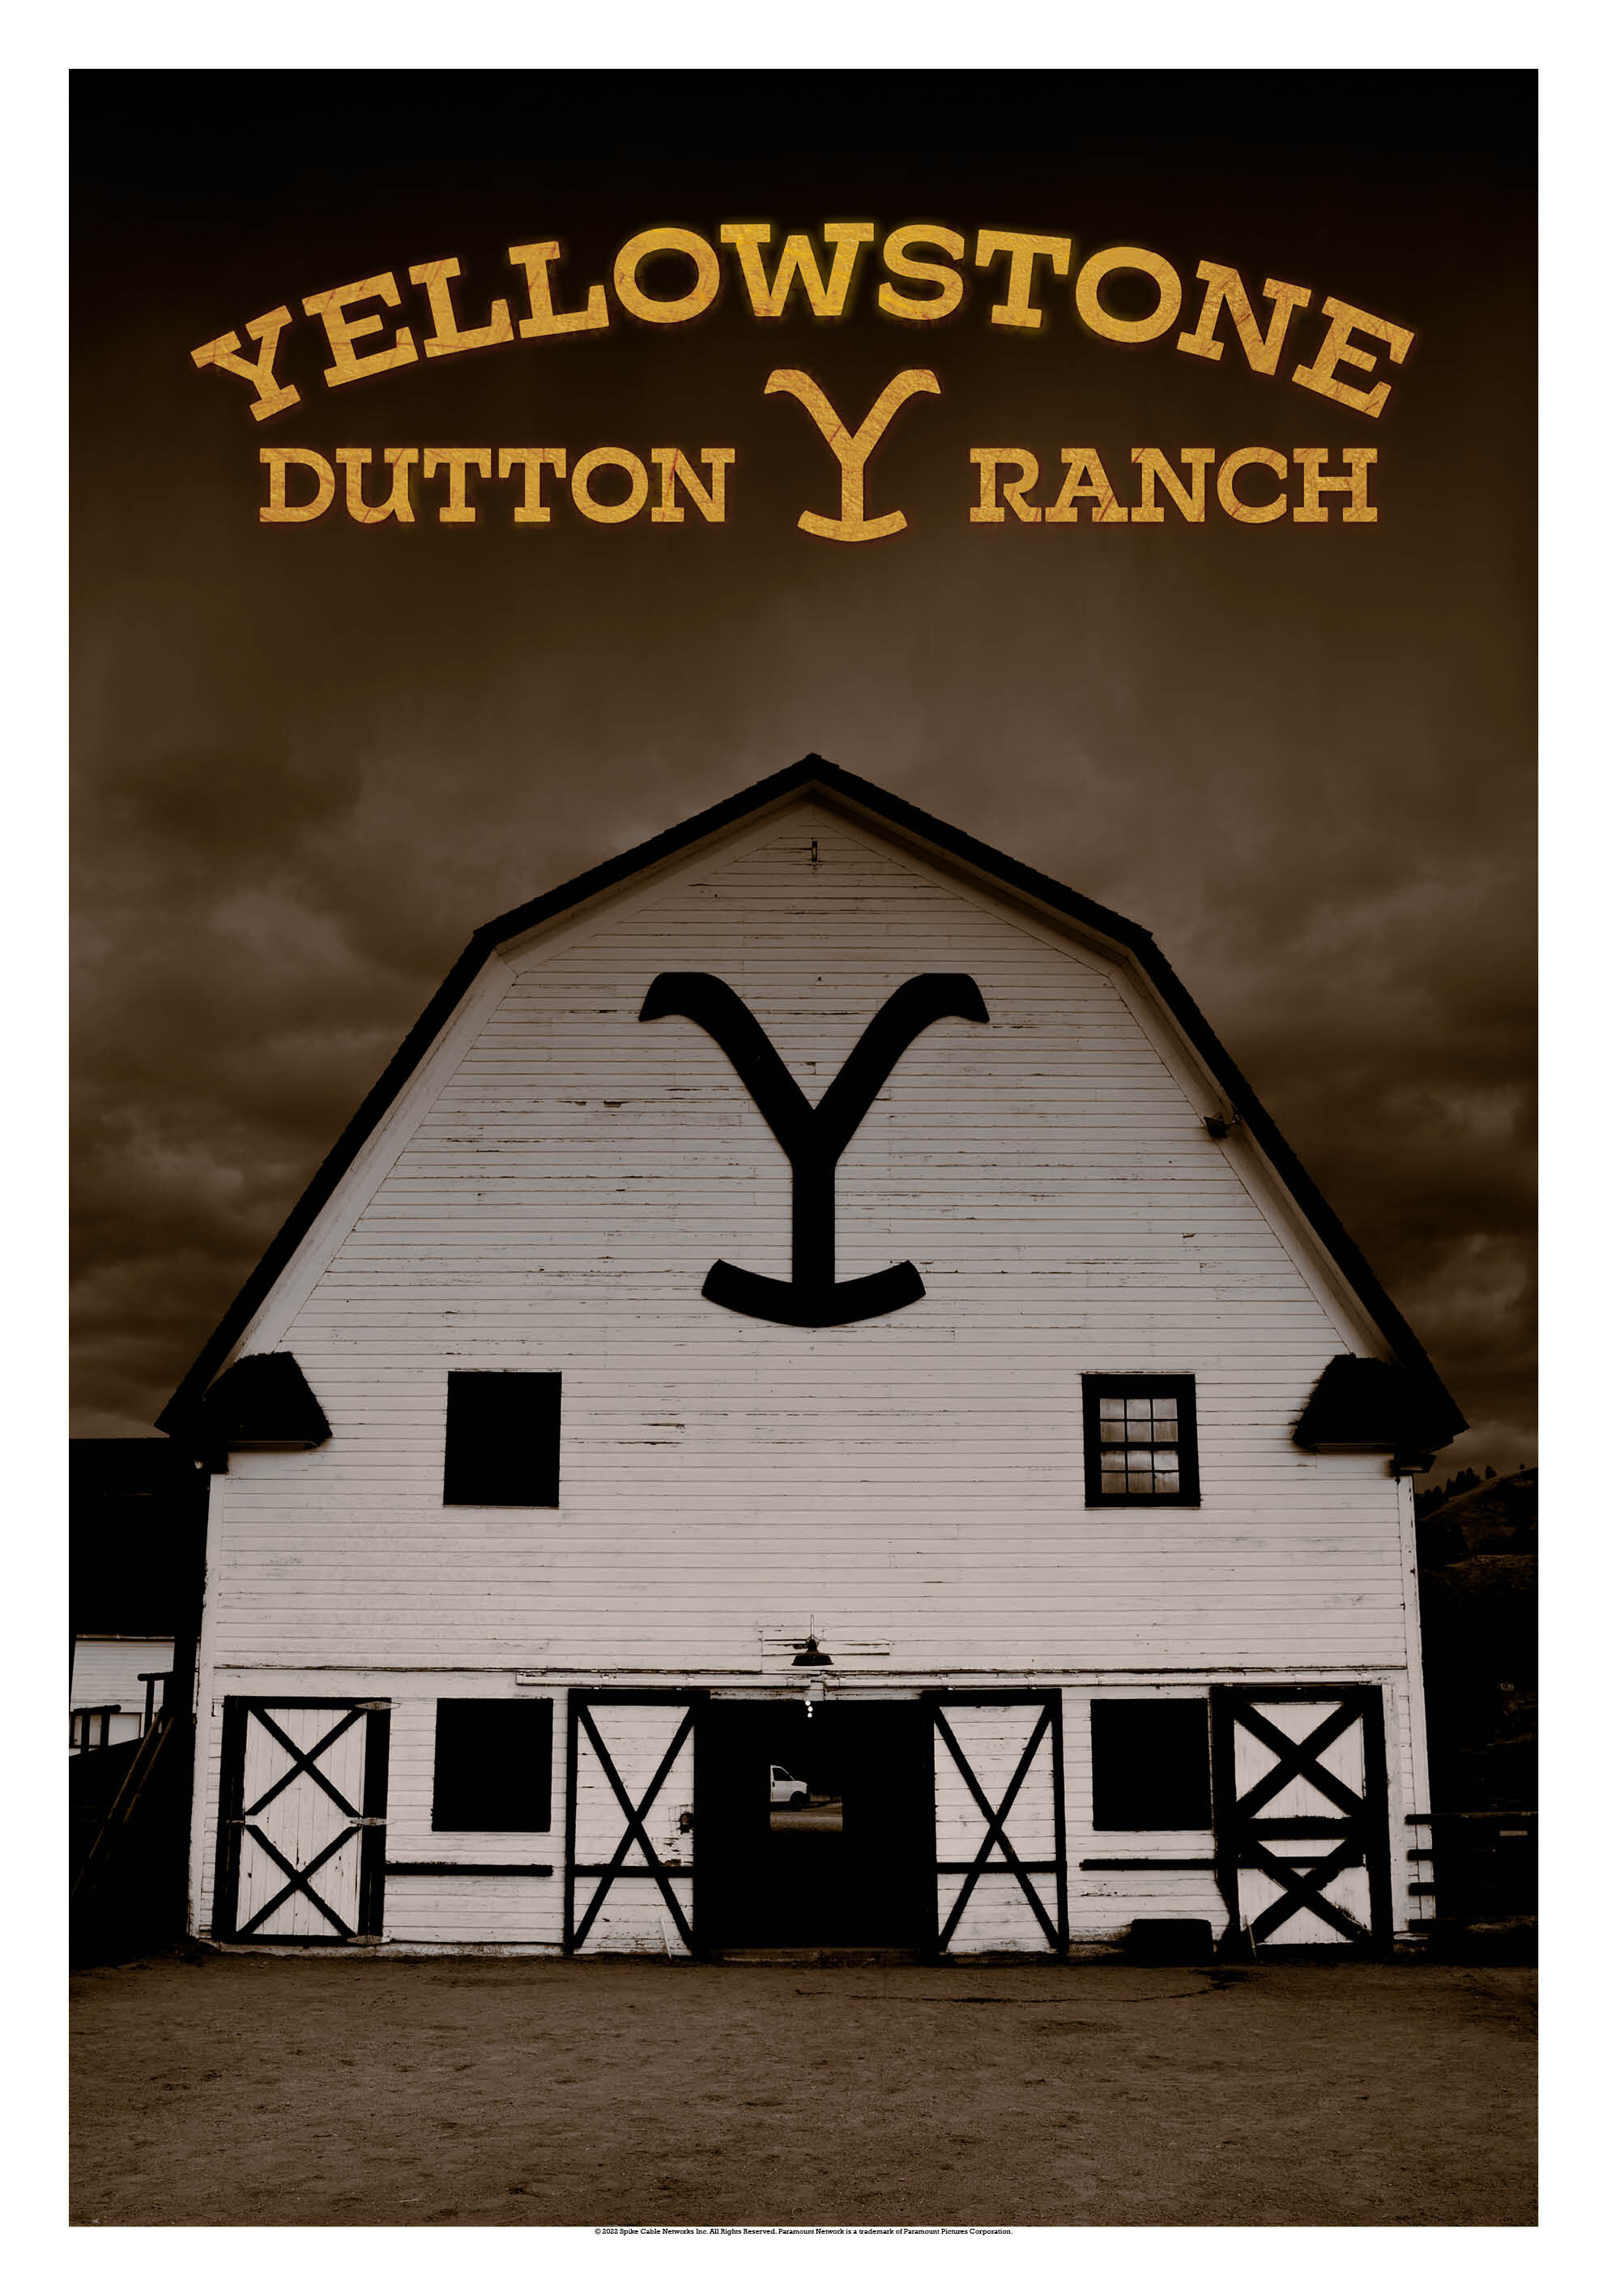 Yellowstone - Dutton Ranch Barn Poster